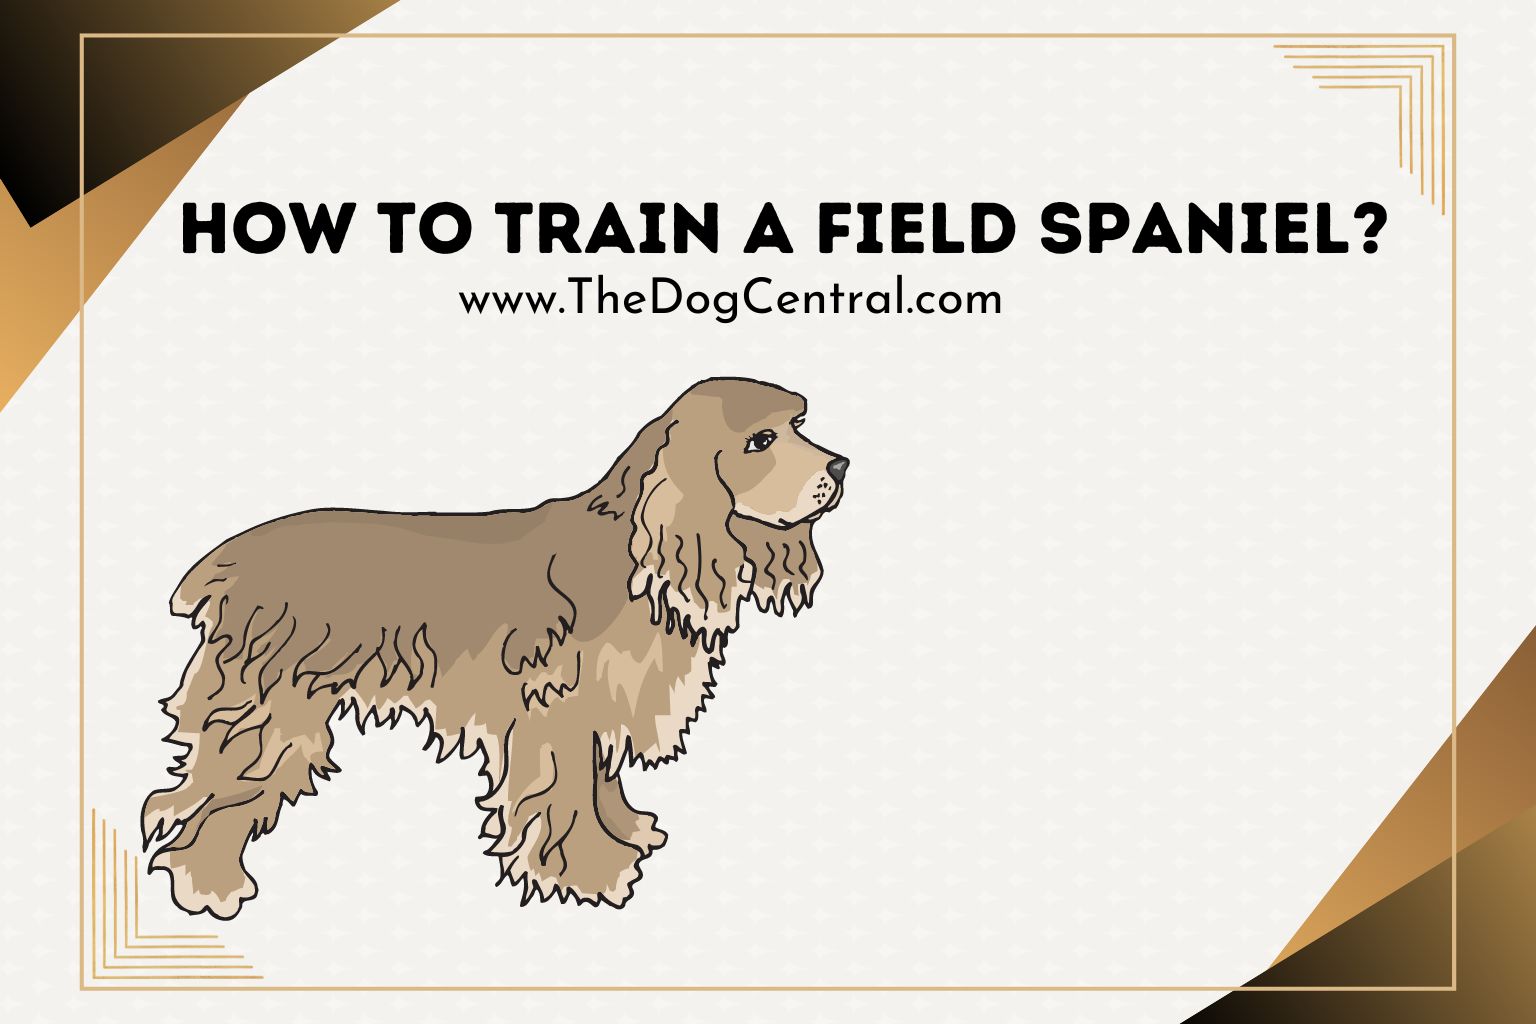 How to Train a Field Spaniel